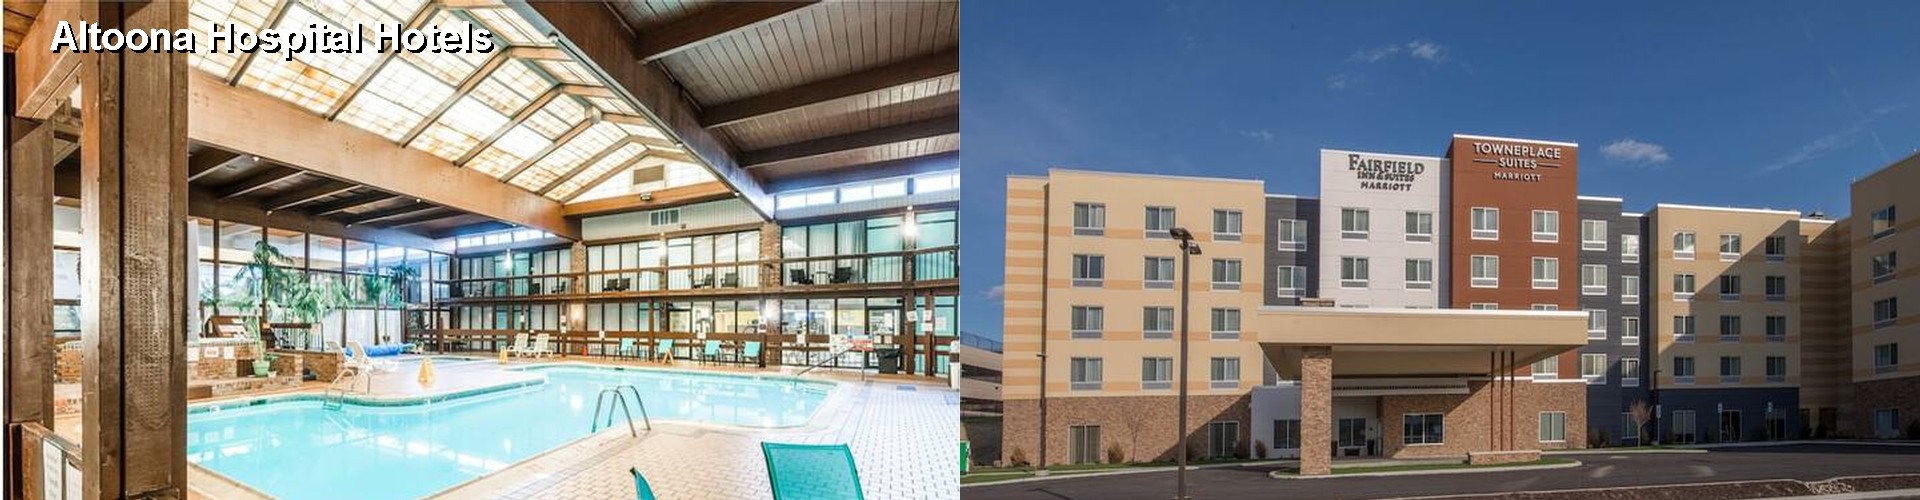 5 Best Hotels near Altoona Hospital